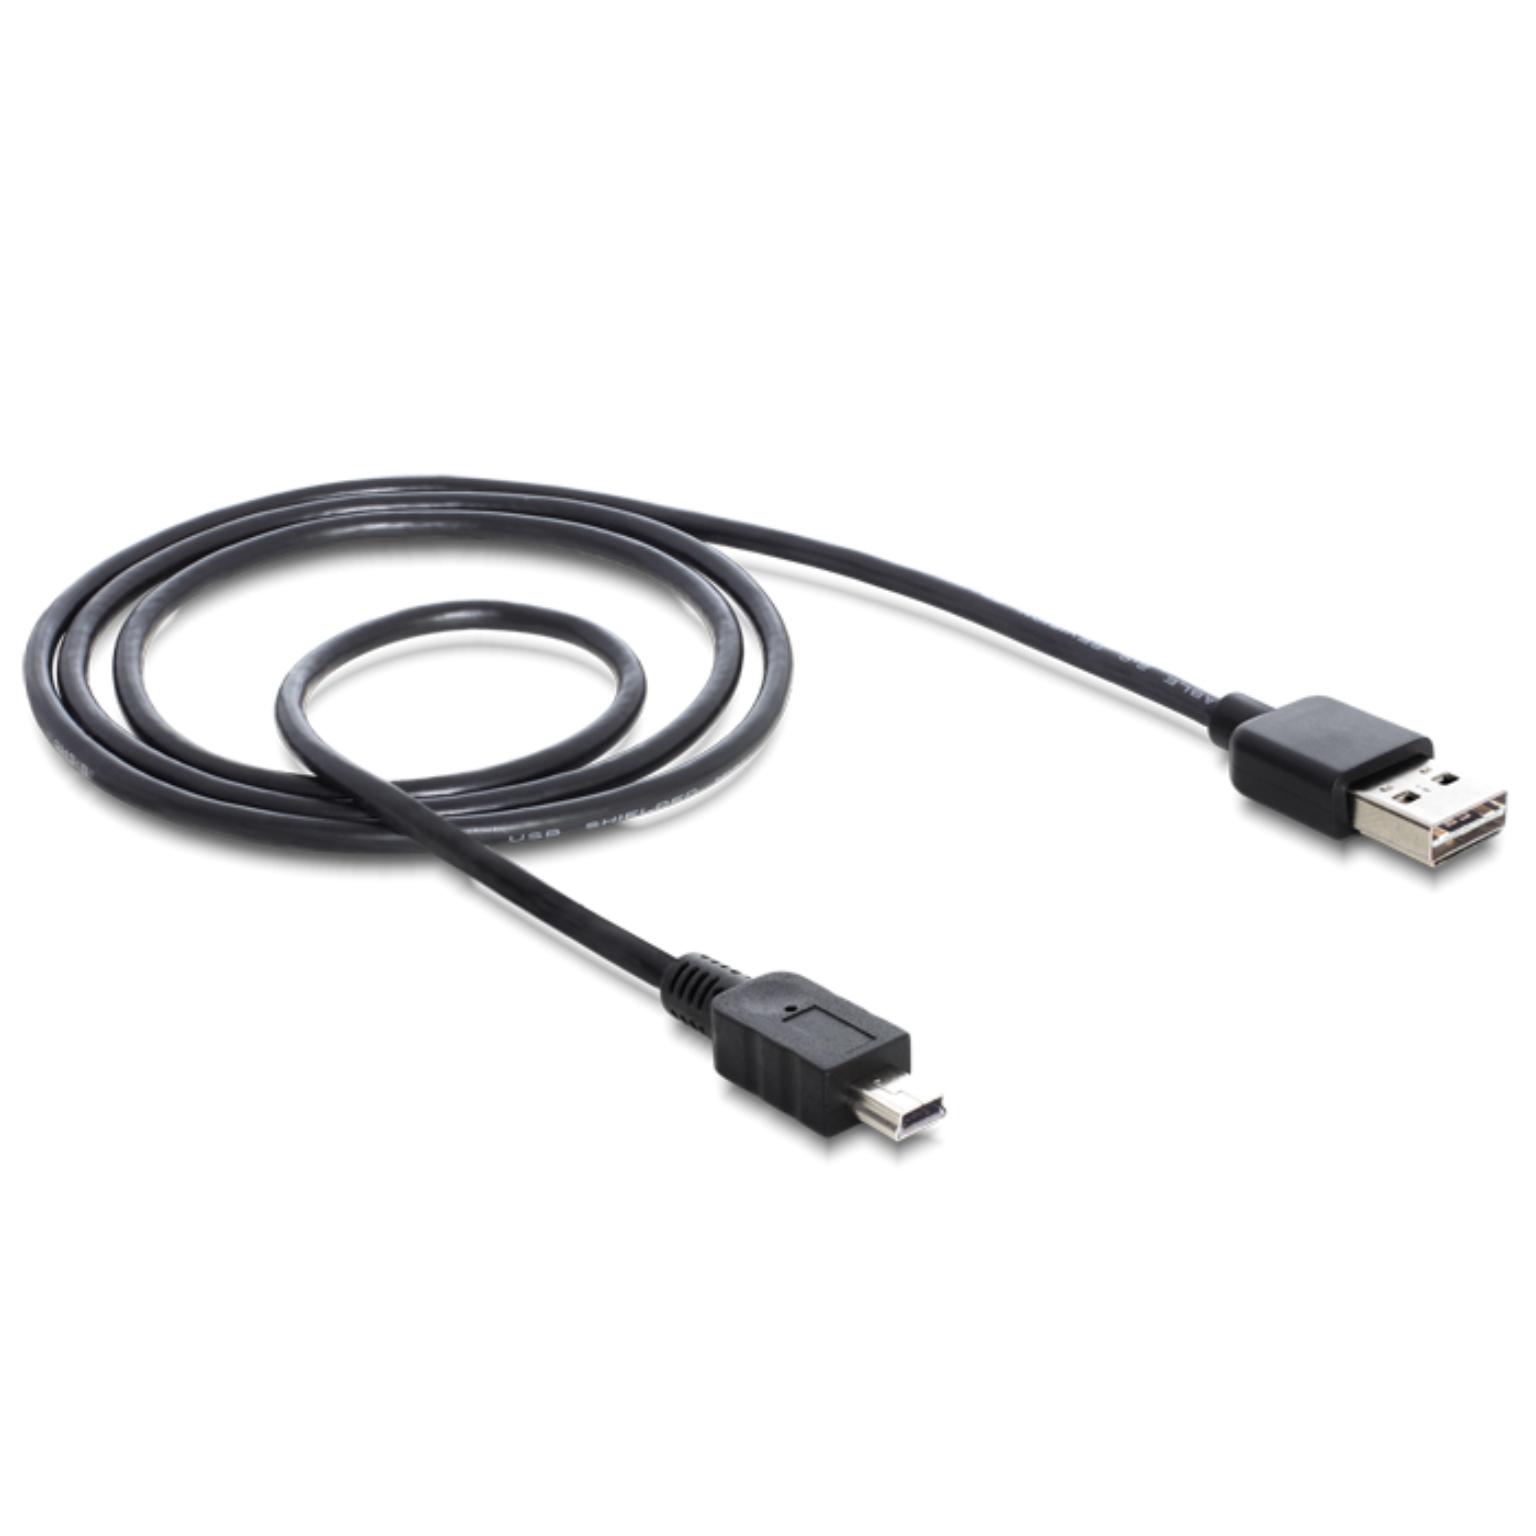 Mini USB 2.0 Kabel kaufen - Allekabel.de